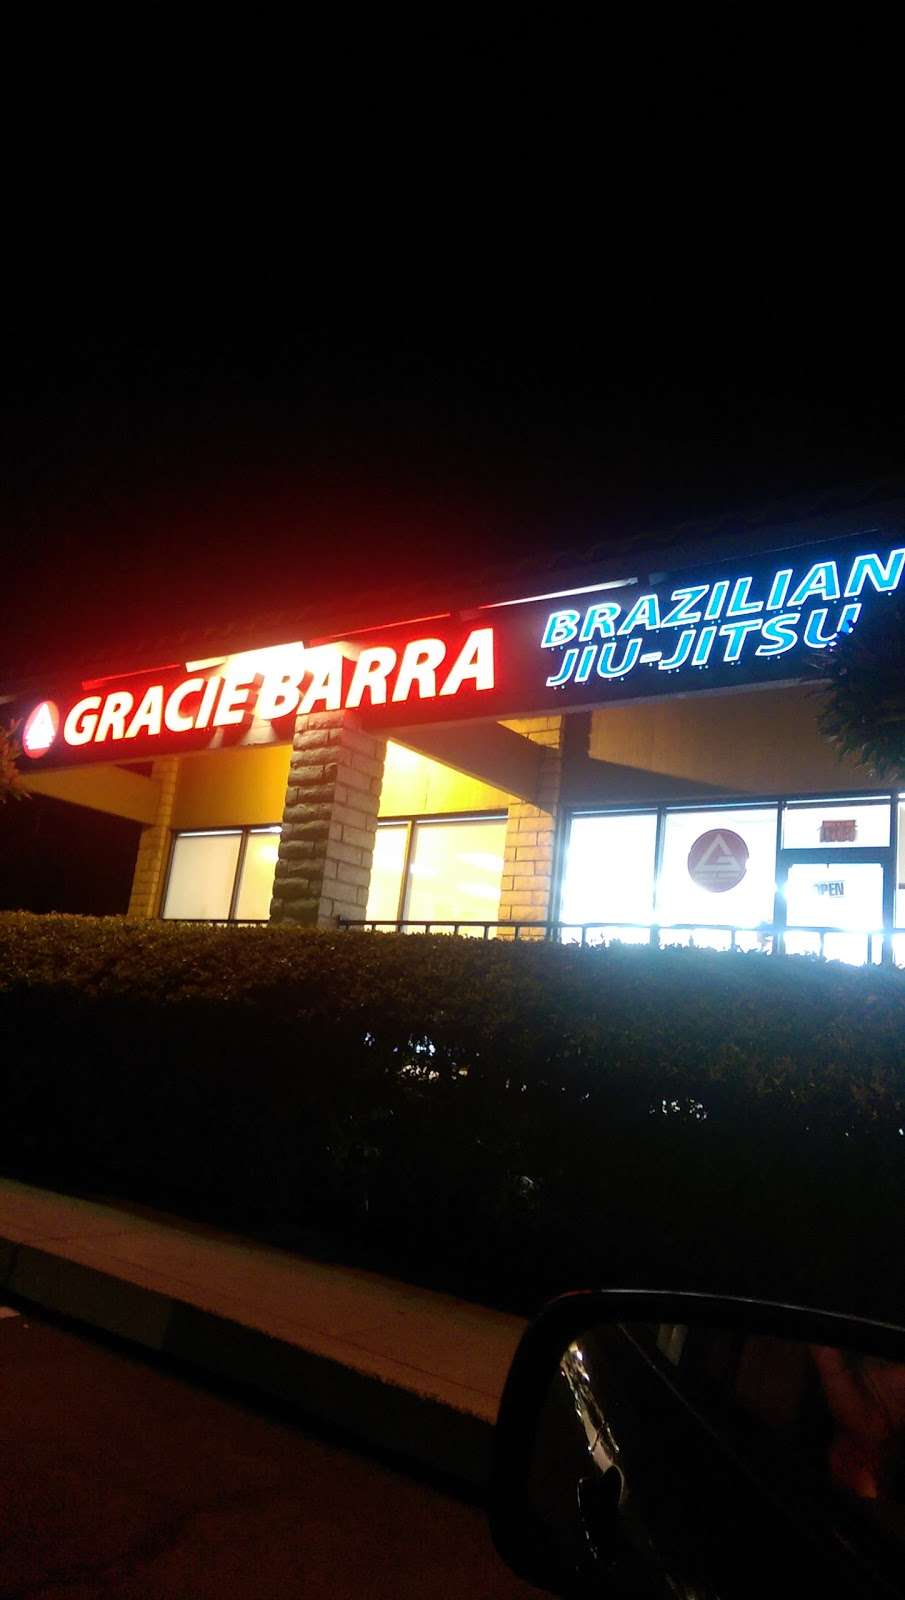 Gracie Barra Martial Art School Upland | 1235 W Foothill Blvd, Upland, CA 91786 | Phone: (909) 900-6128